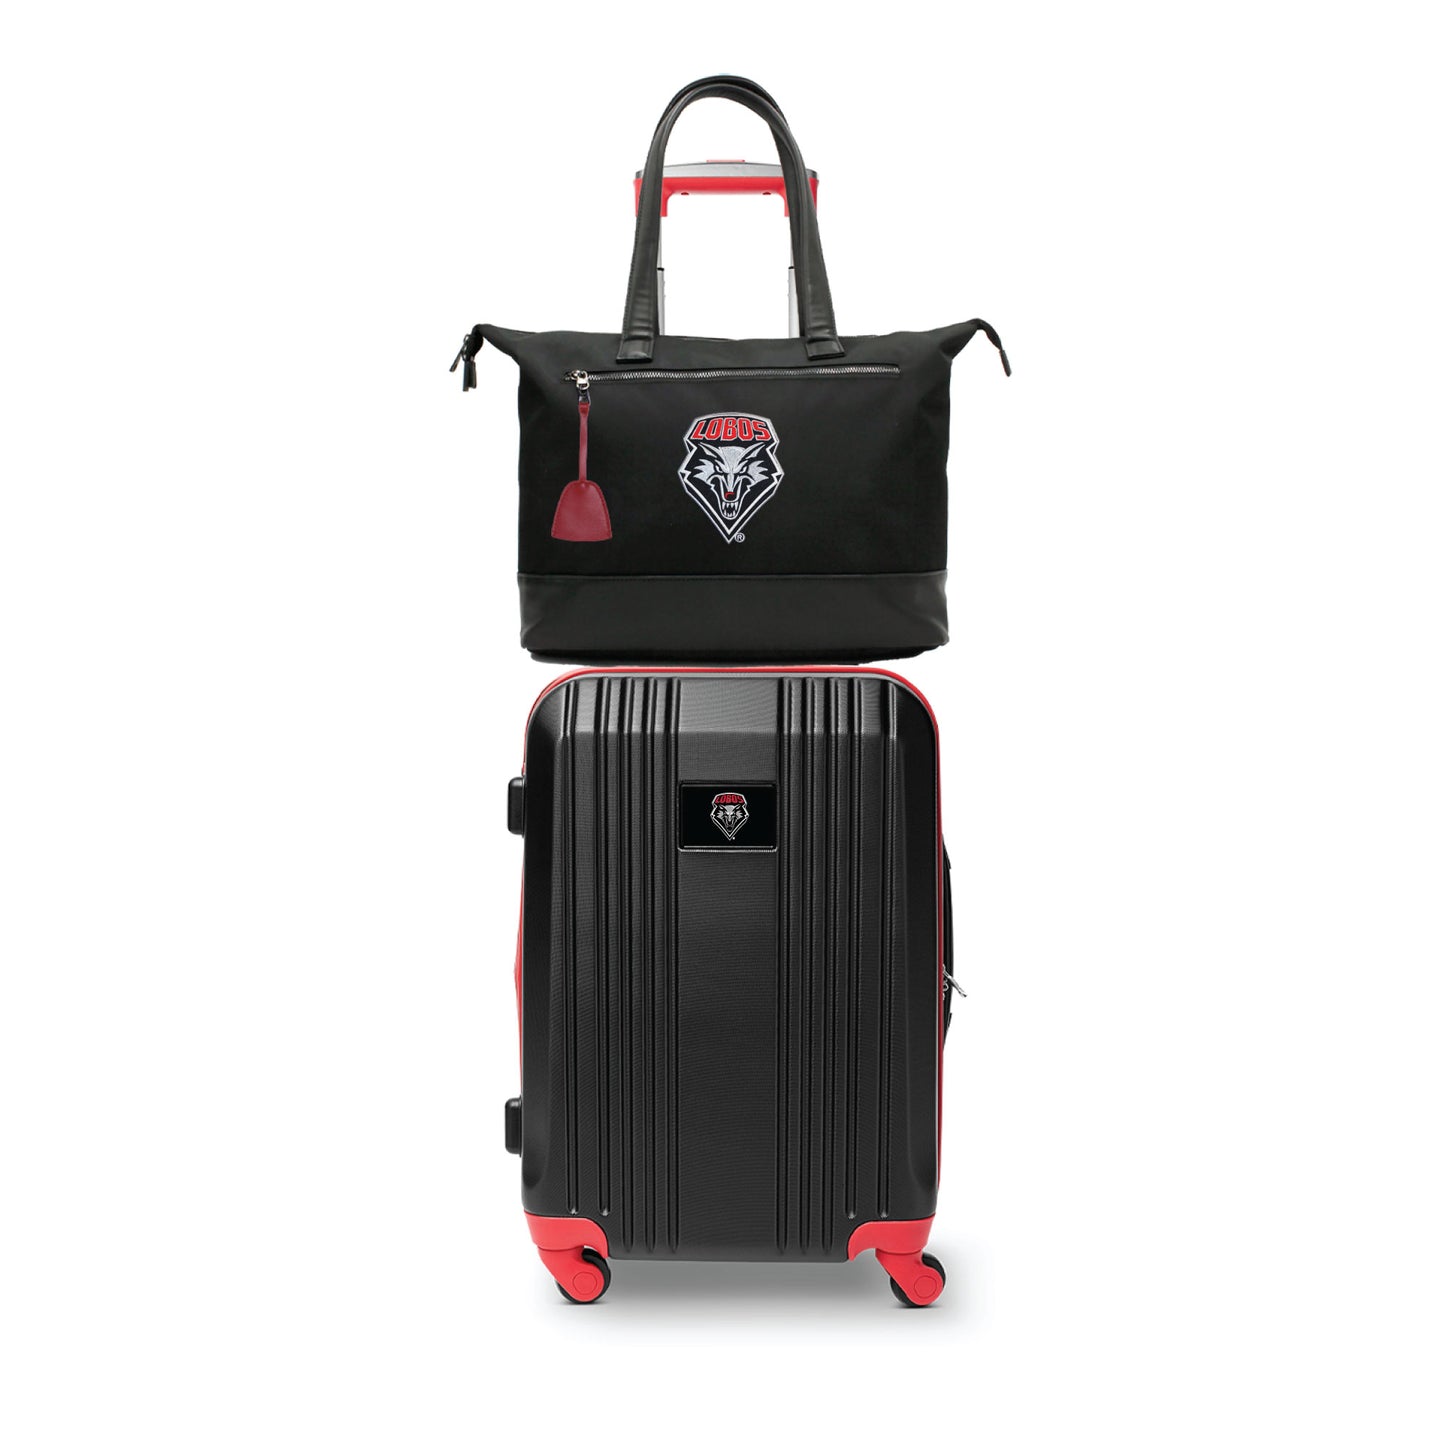 New Mexico Lobos Premium Laptop Tote Bag and Luggage Set